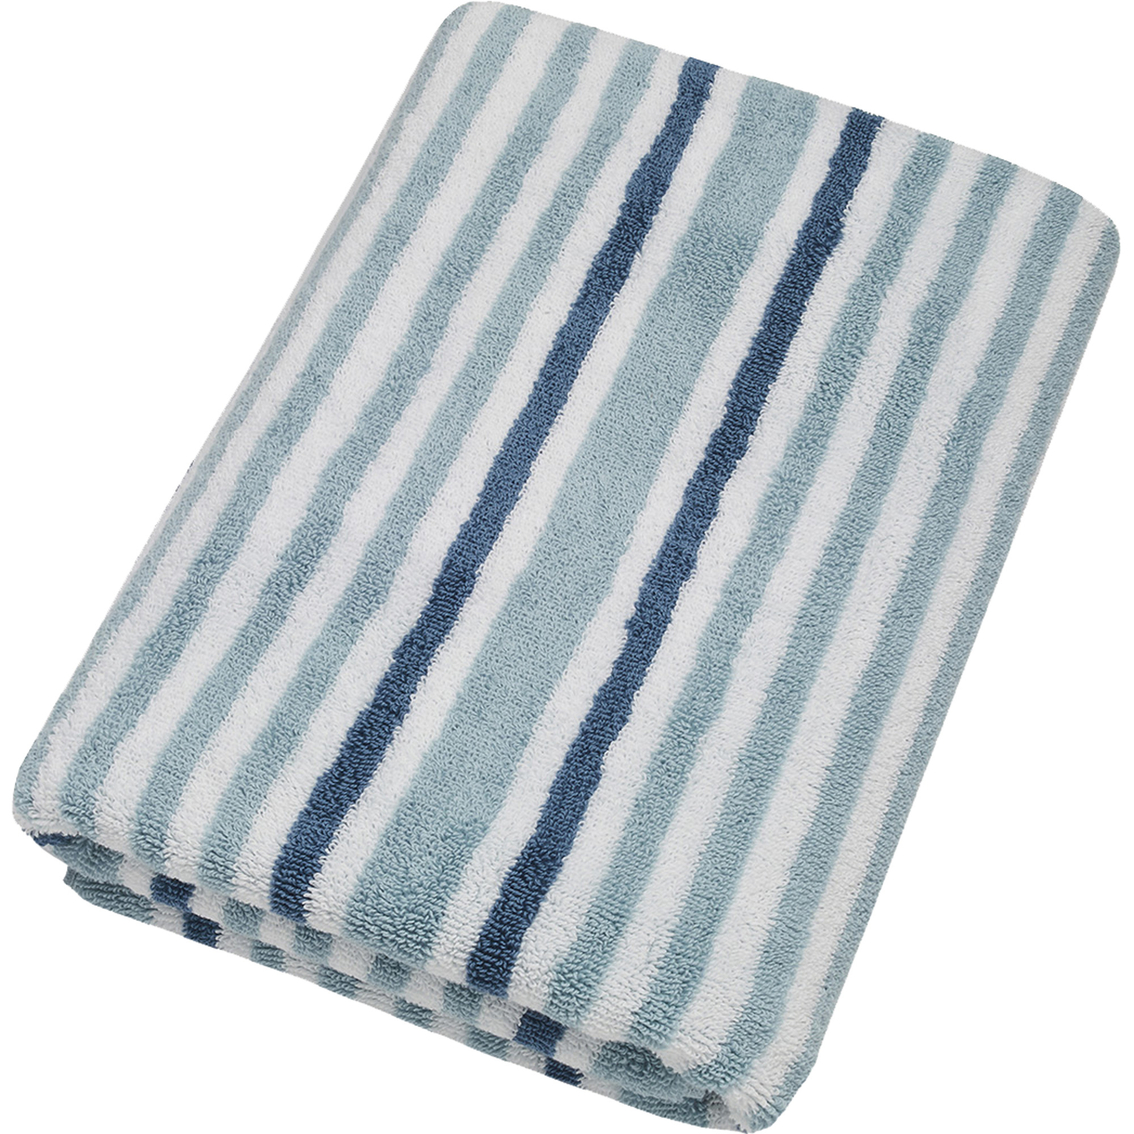 Charisma Bristol Wash Towel, Bath Towels, Household